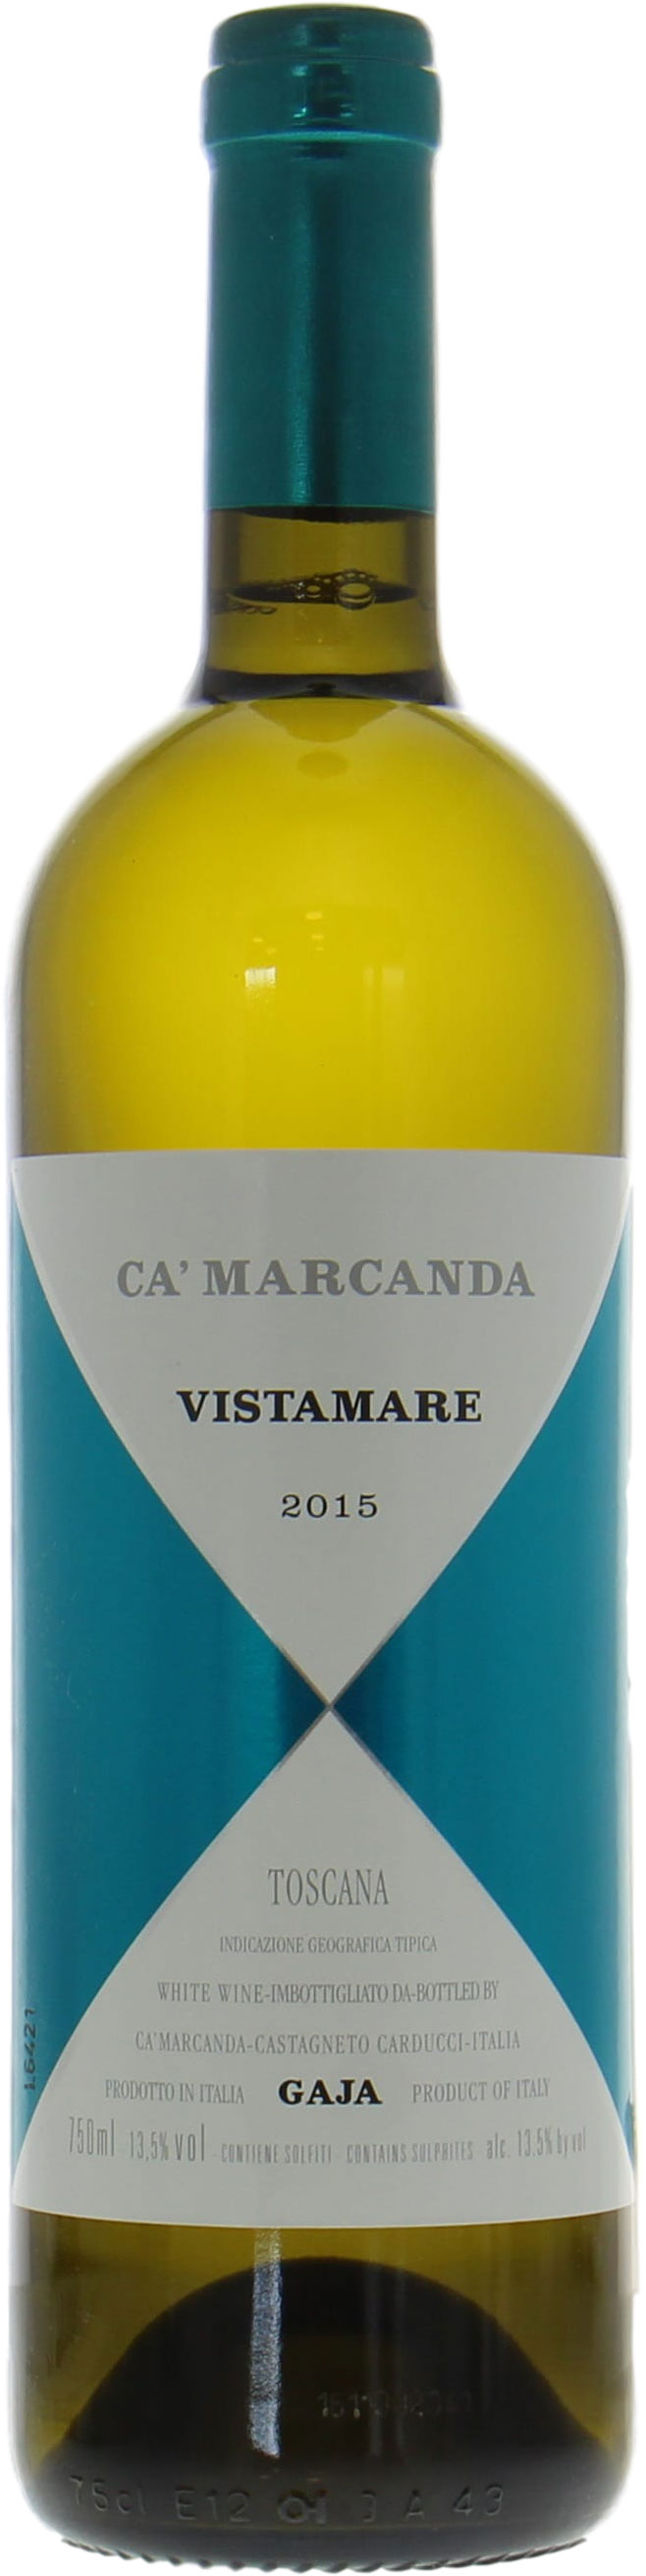 Ca'Marcanda - Vistamare Gaja 2015 Perfect